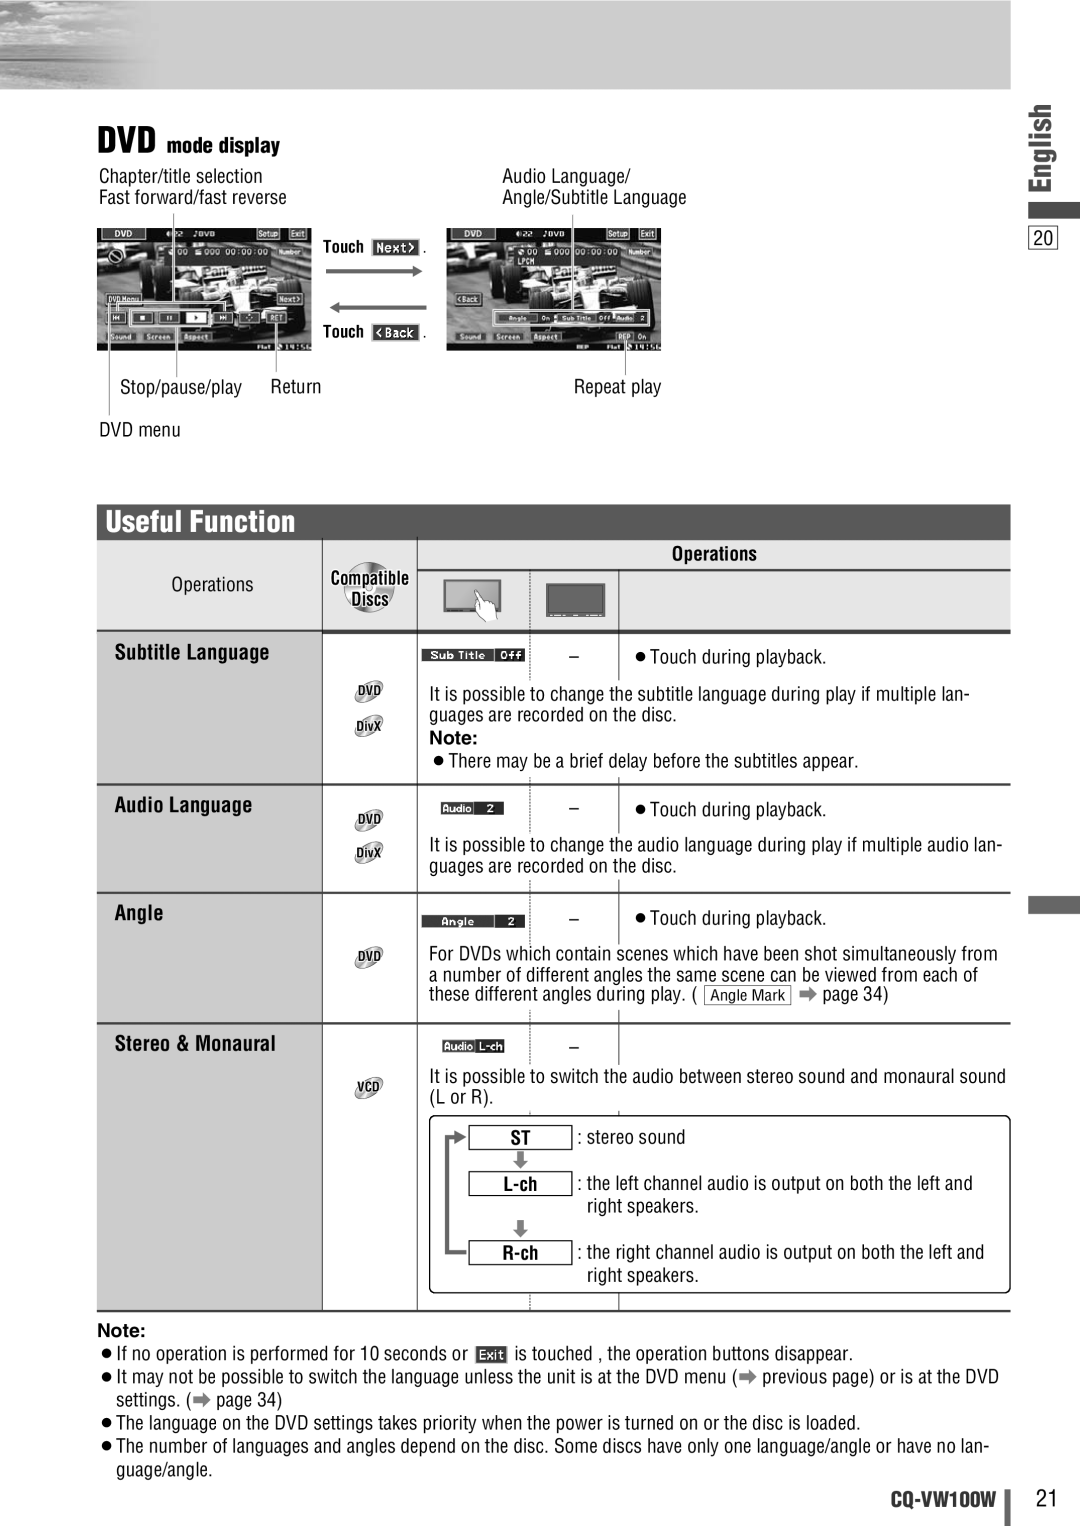 Panasonic CQ-VW100W manual Useful Function, DVD mode display, Subtitle Language, Audio Language, Angle, Stereo & Monaural 